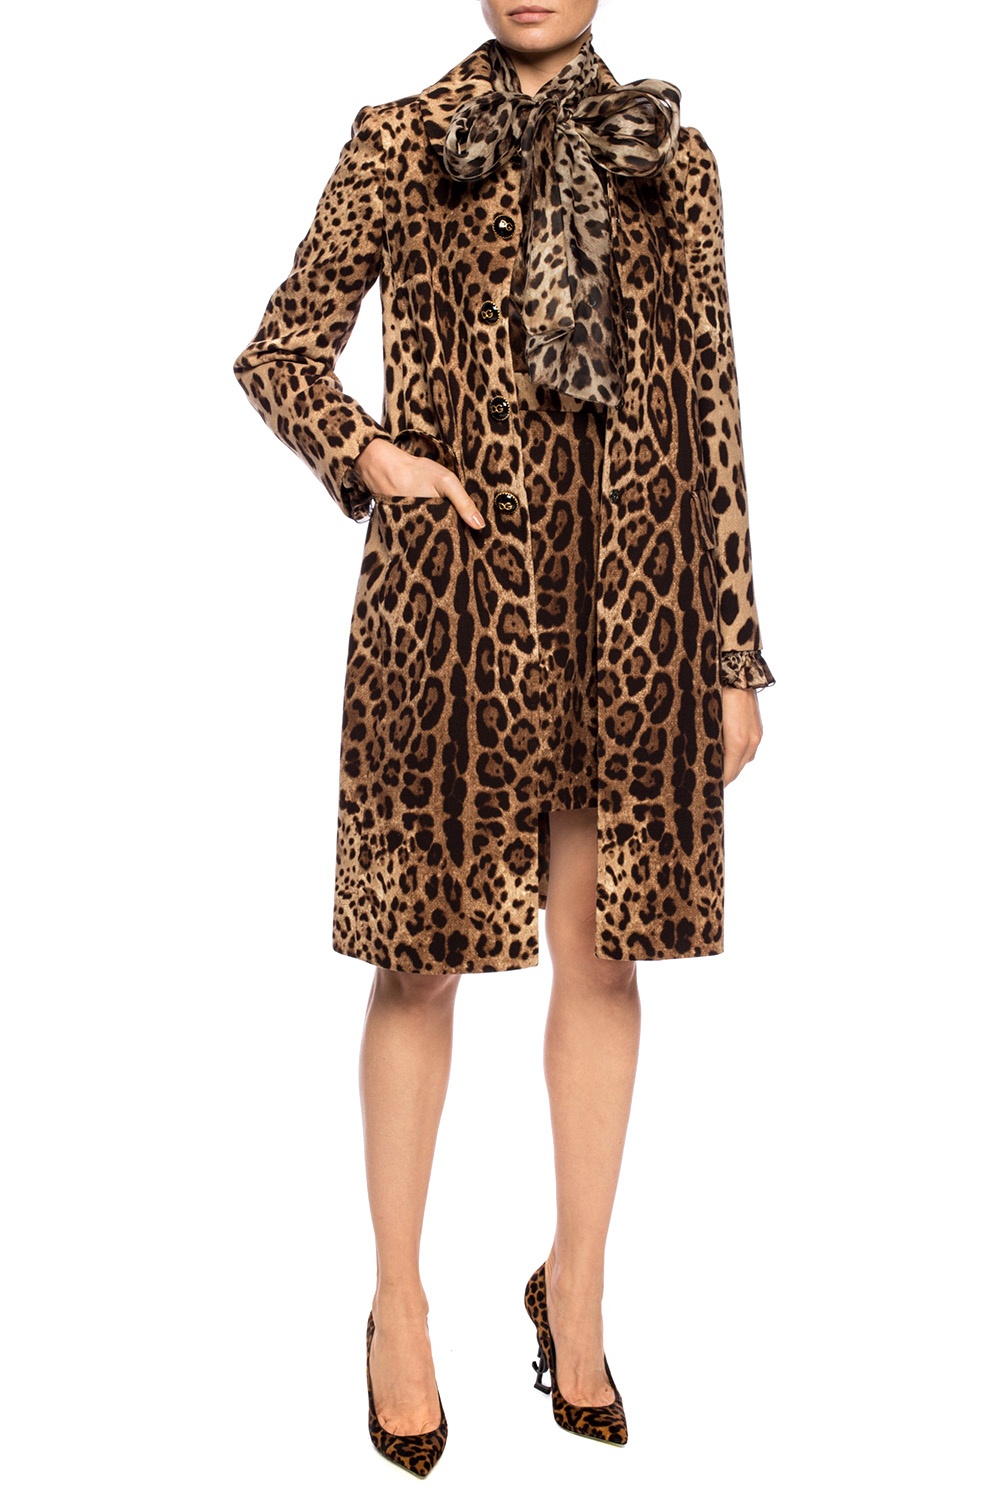 dolce and gabbana leopard jacket